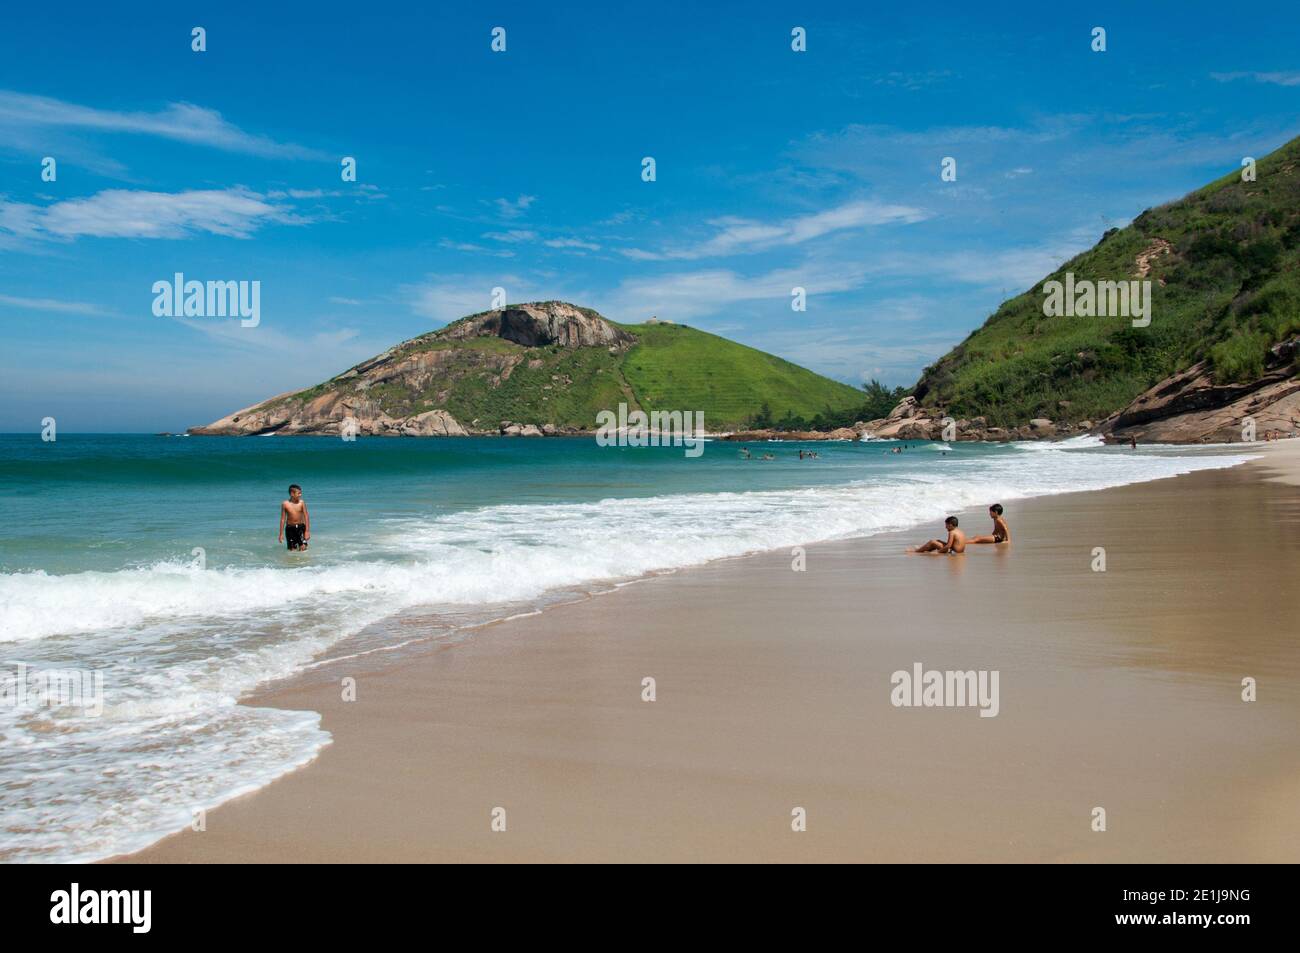 Praia do Meio Beach near Grumari, Rio de Janeiro, Brazil Stock Photo - Alamy